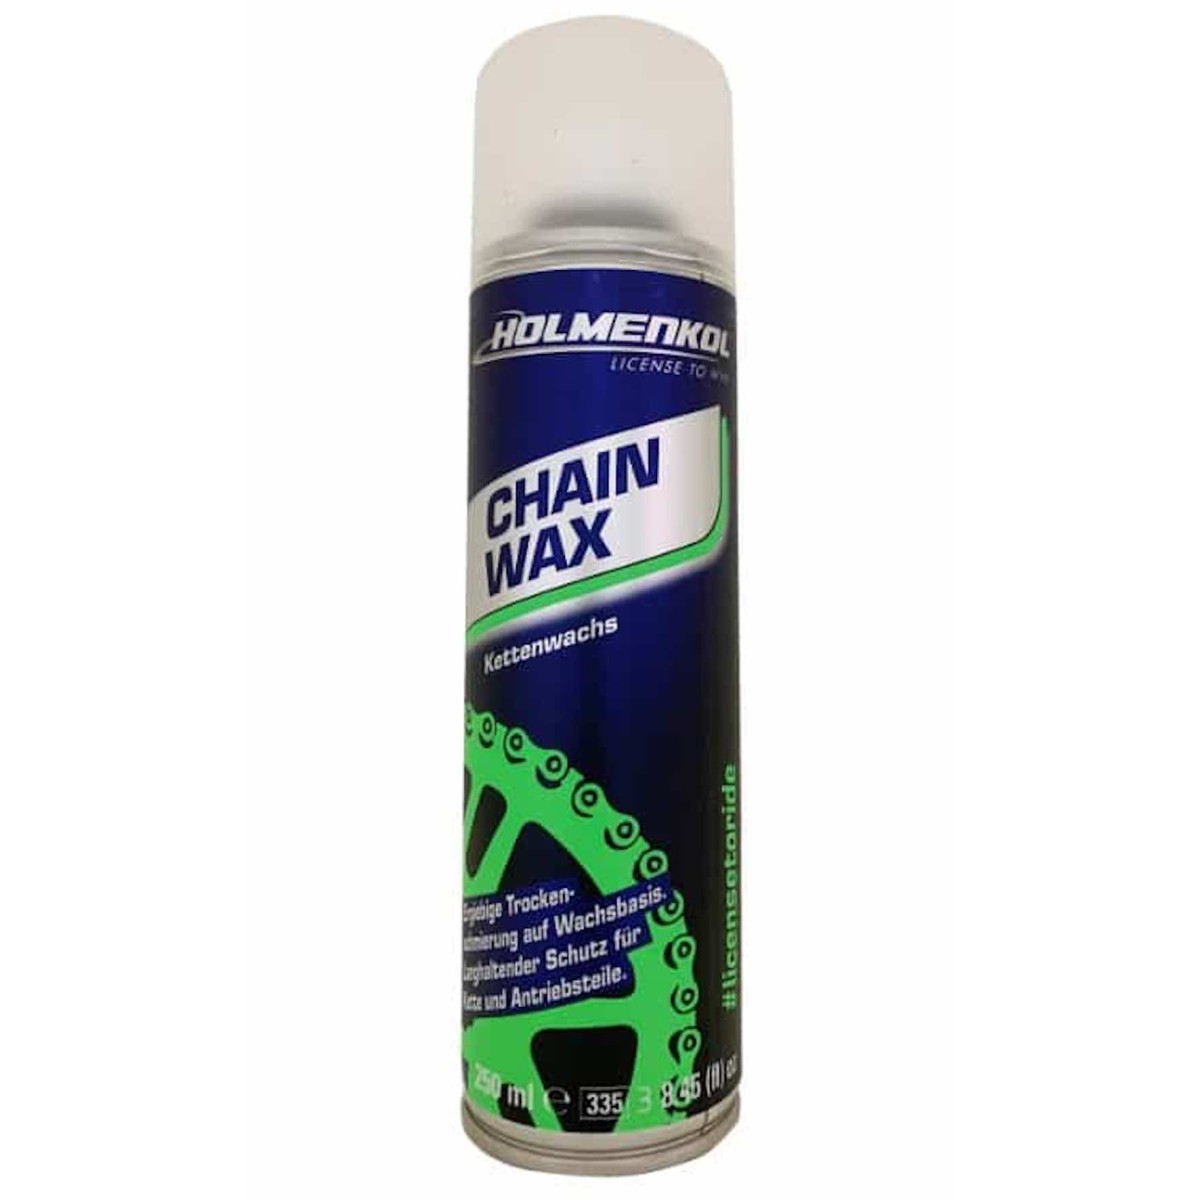 HOLMENKOL spray chain wax 250ml